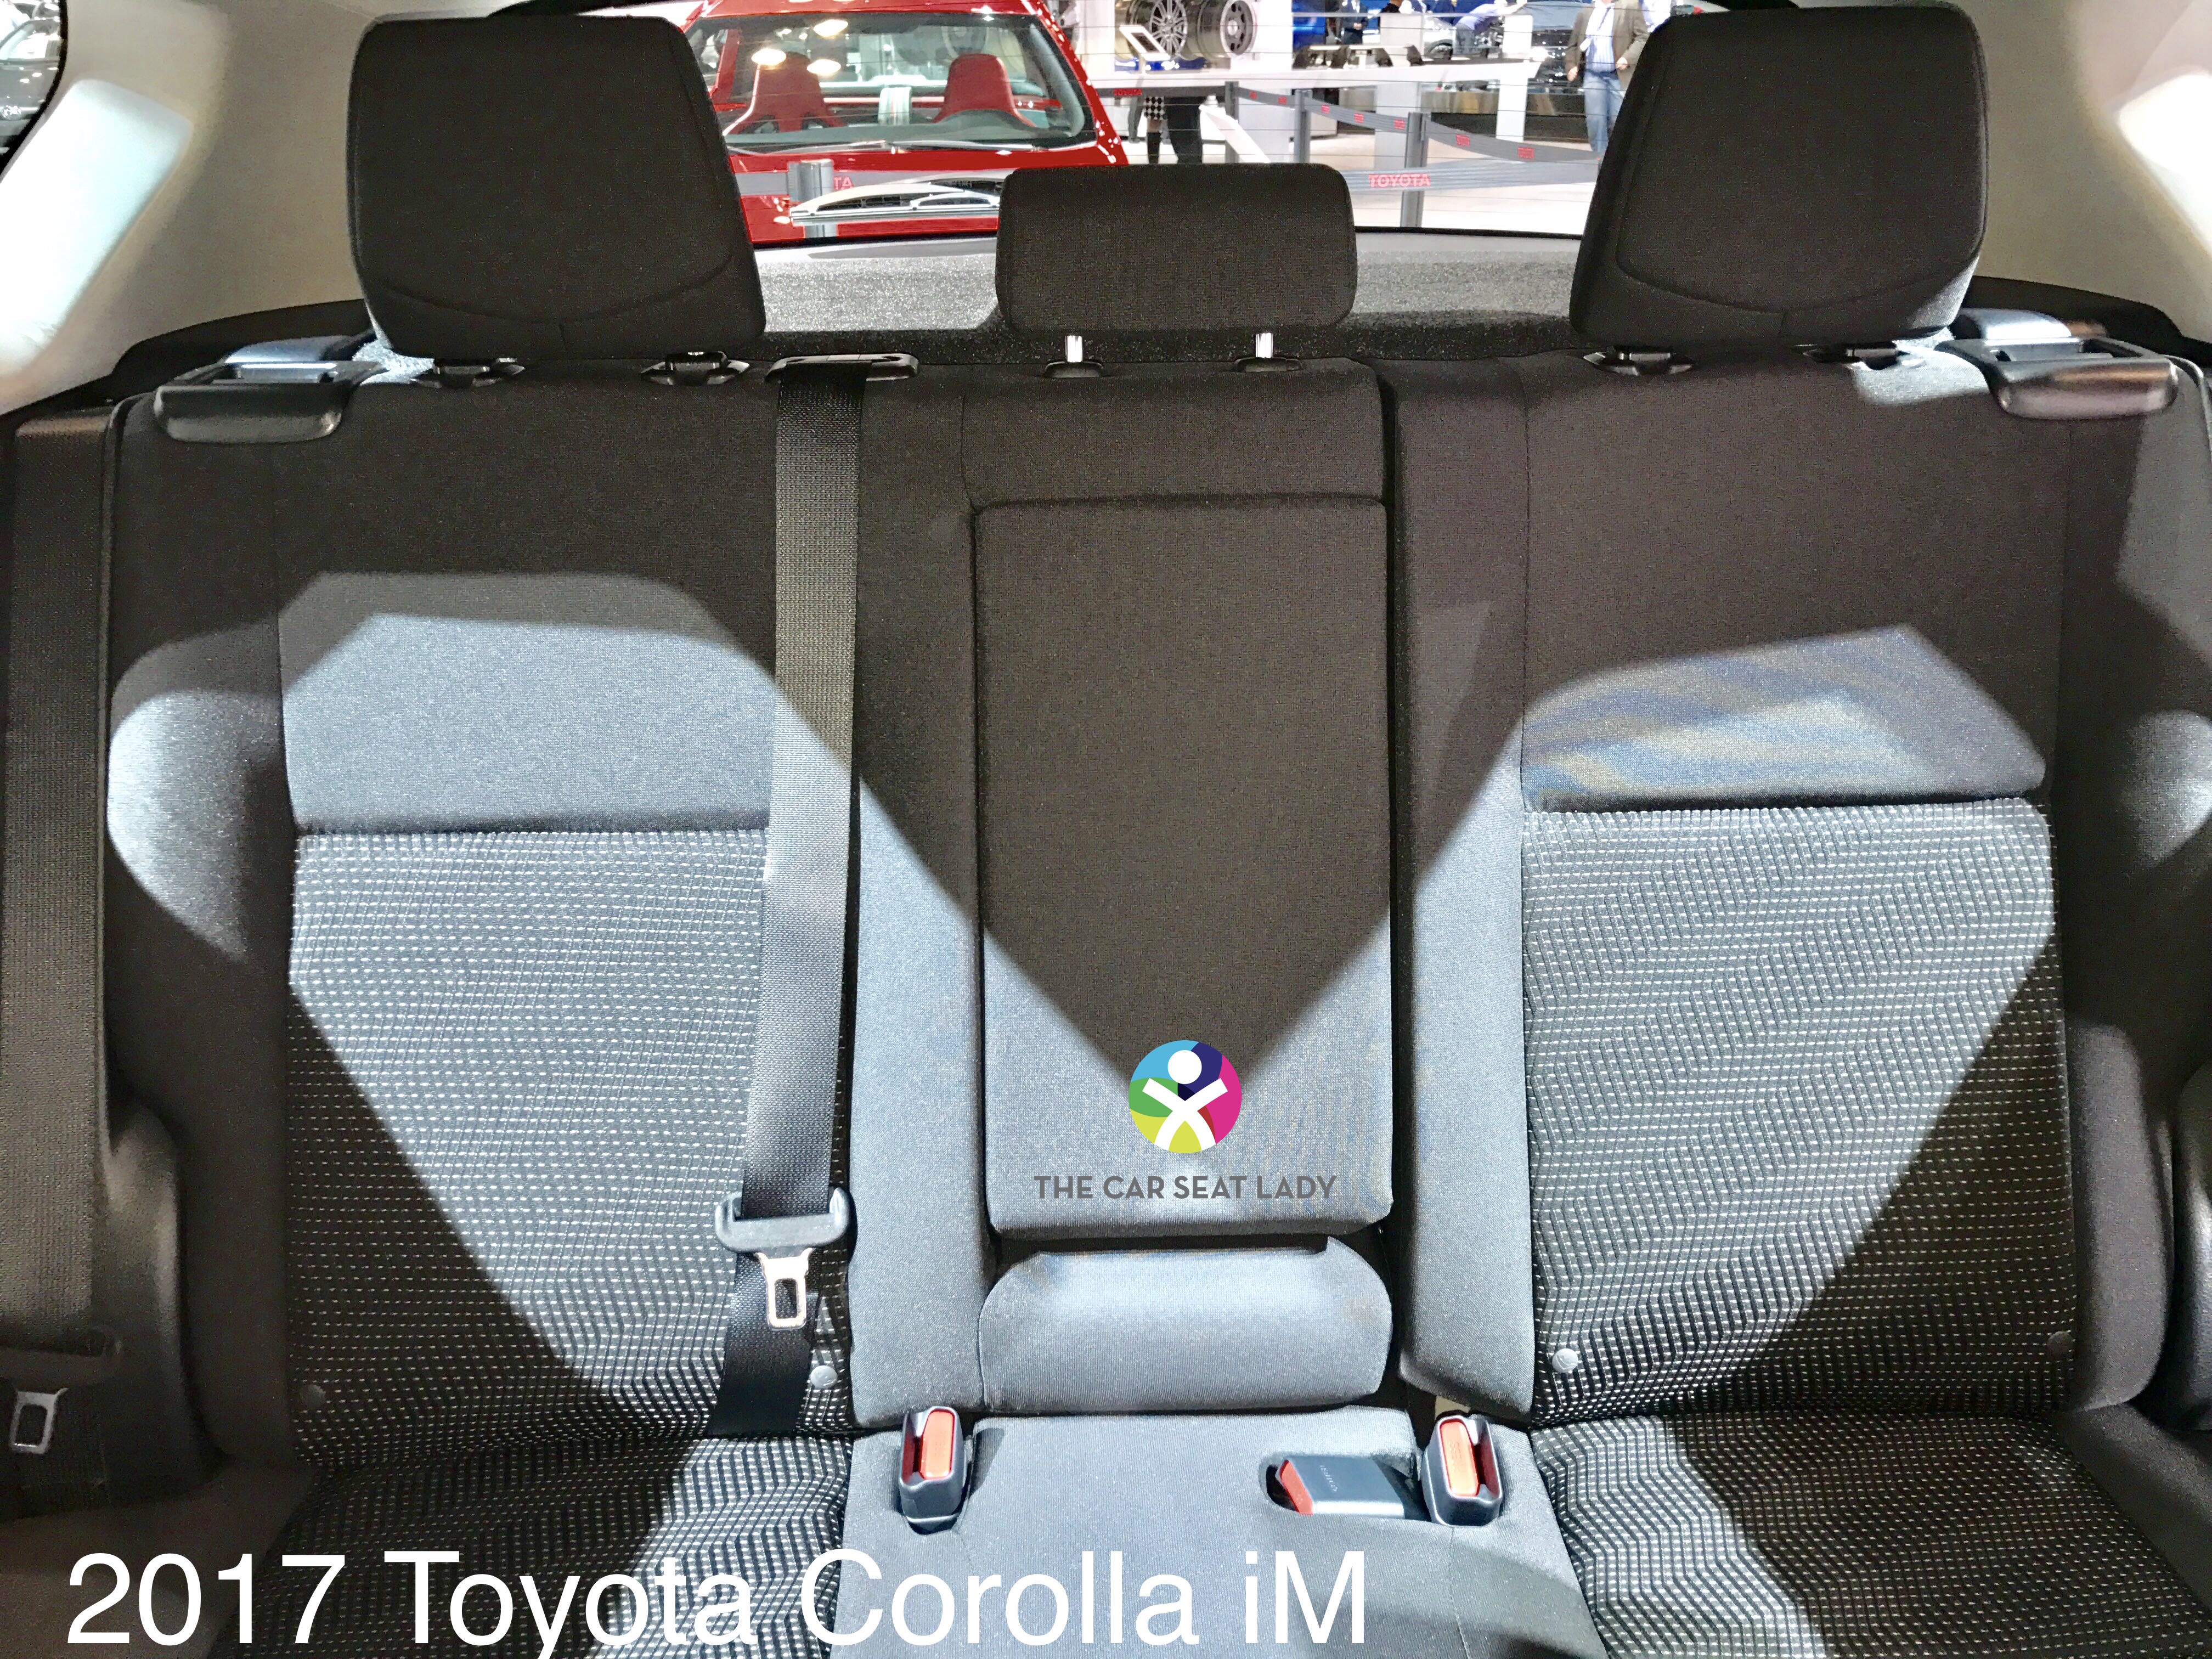 The Car Seat LadyToyota Corolla iM - The Car Seat Lady